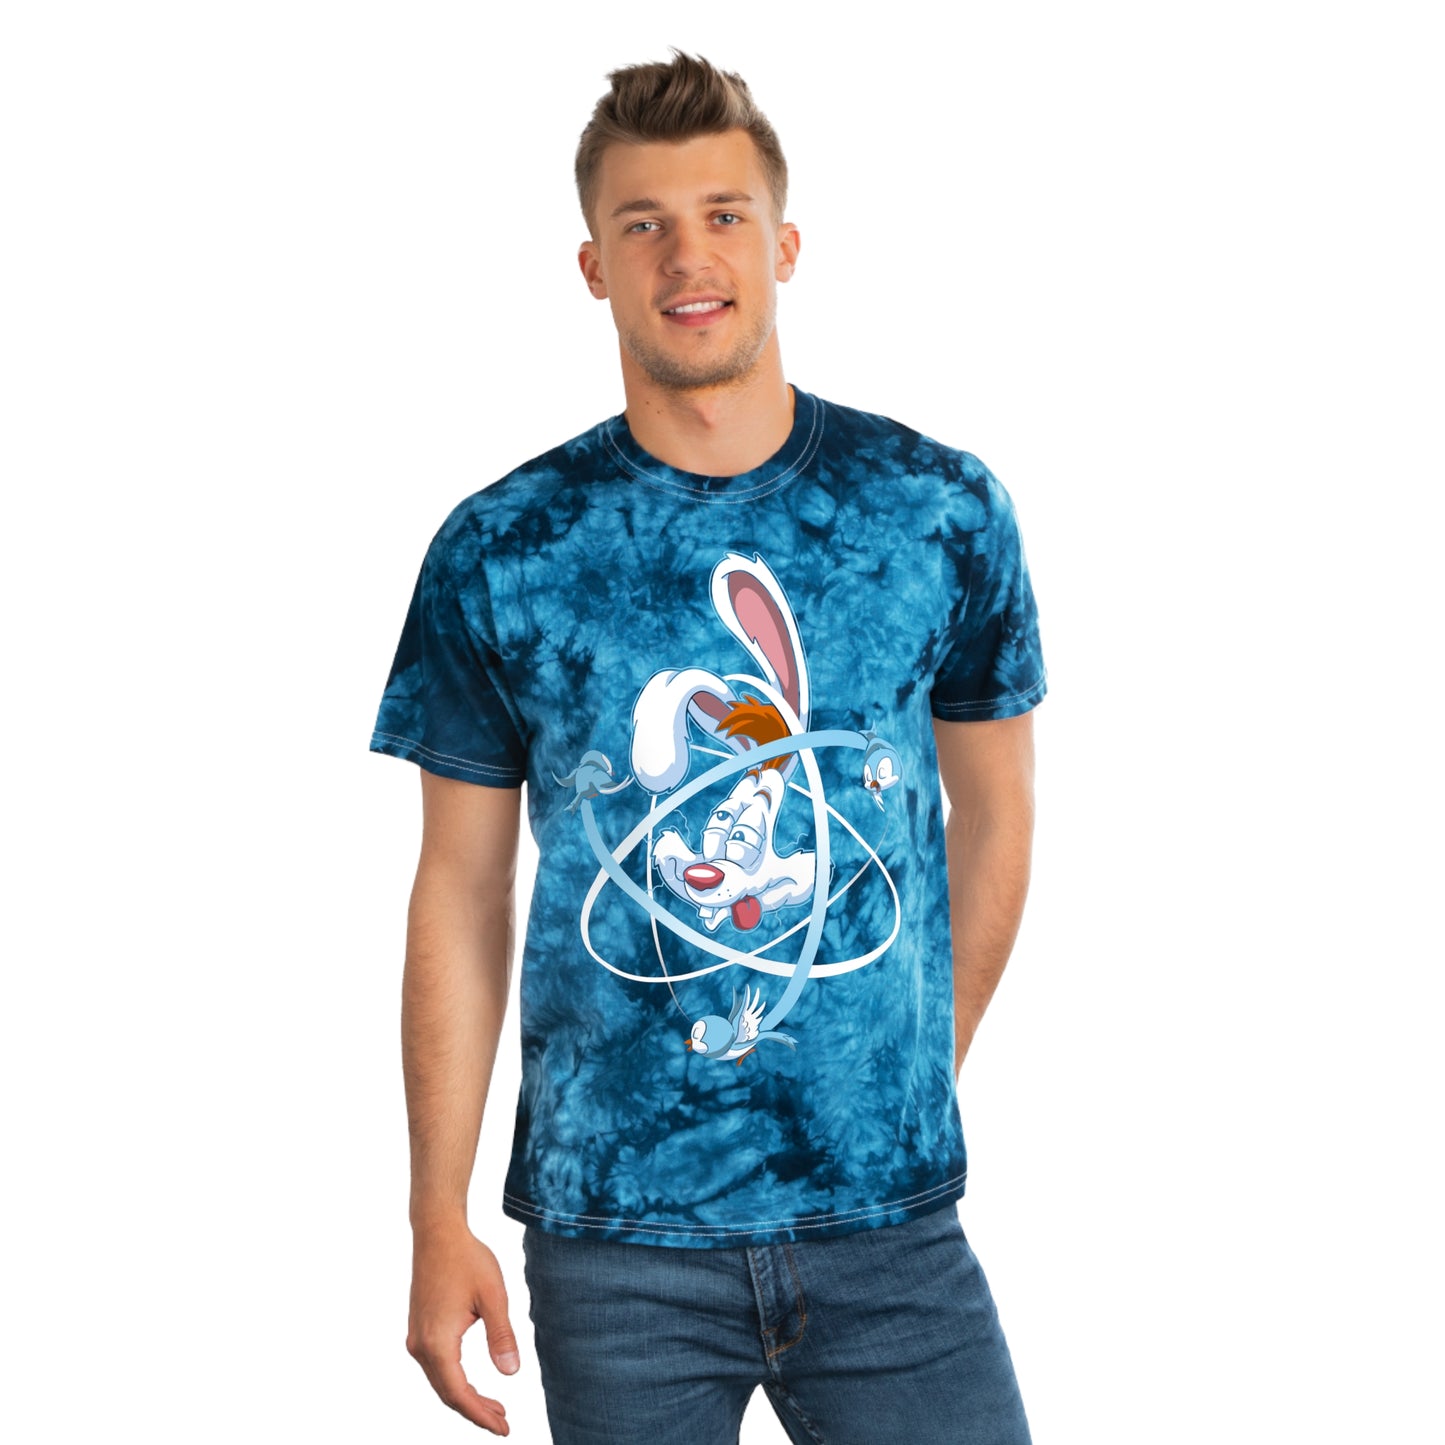 Cartoon Science tie-dye t-shirt